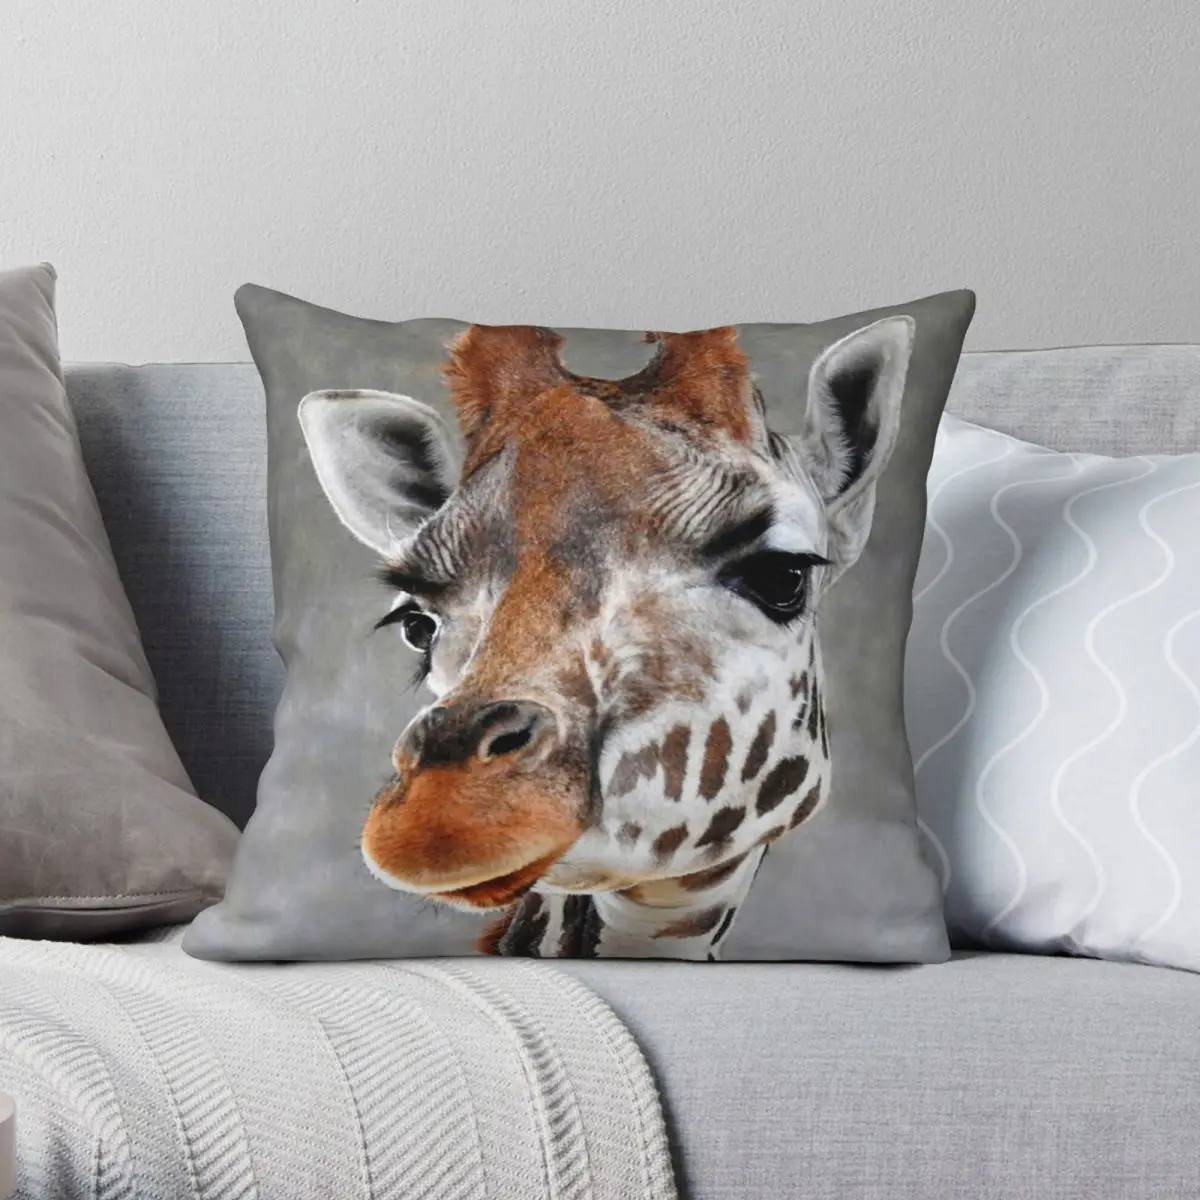 

Giraffe On Grey Square Pillowcase Polyester Linen Velvet Zip Decor Throw Pillow Case Bed Cushion Cover